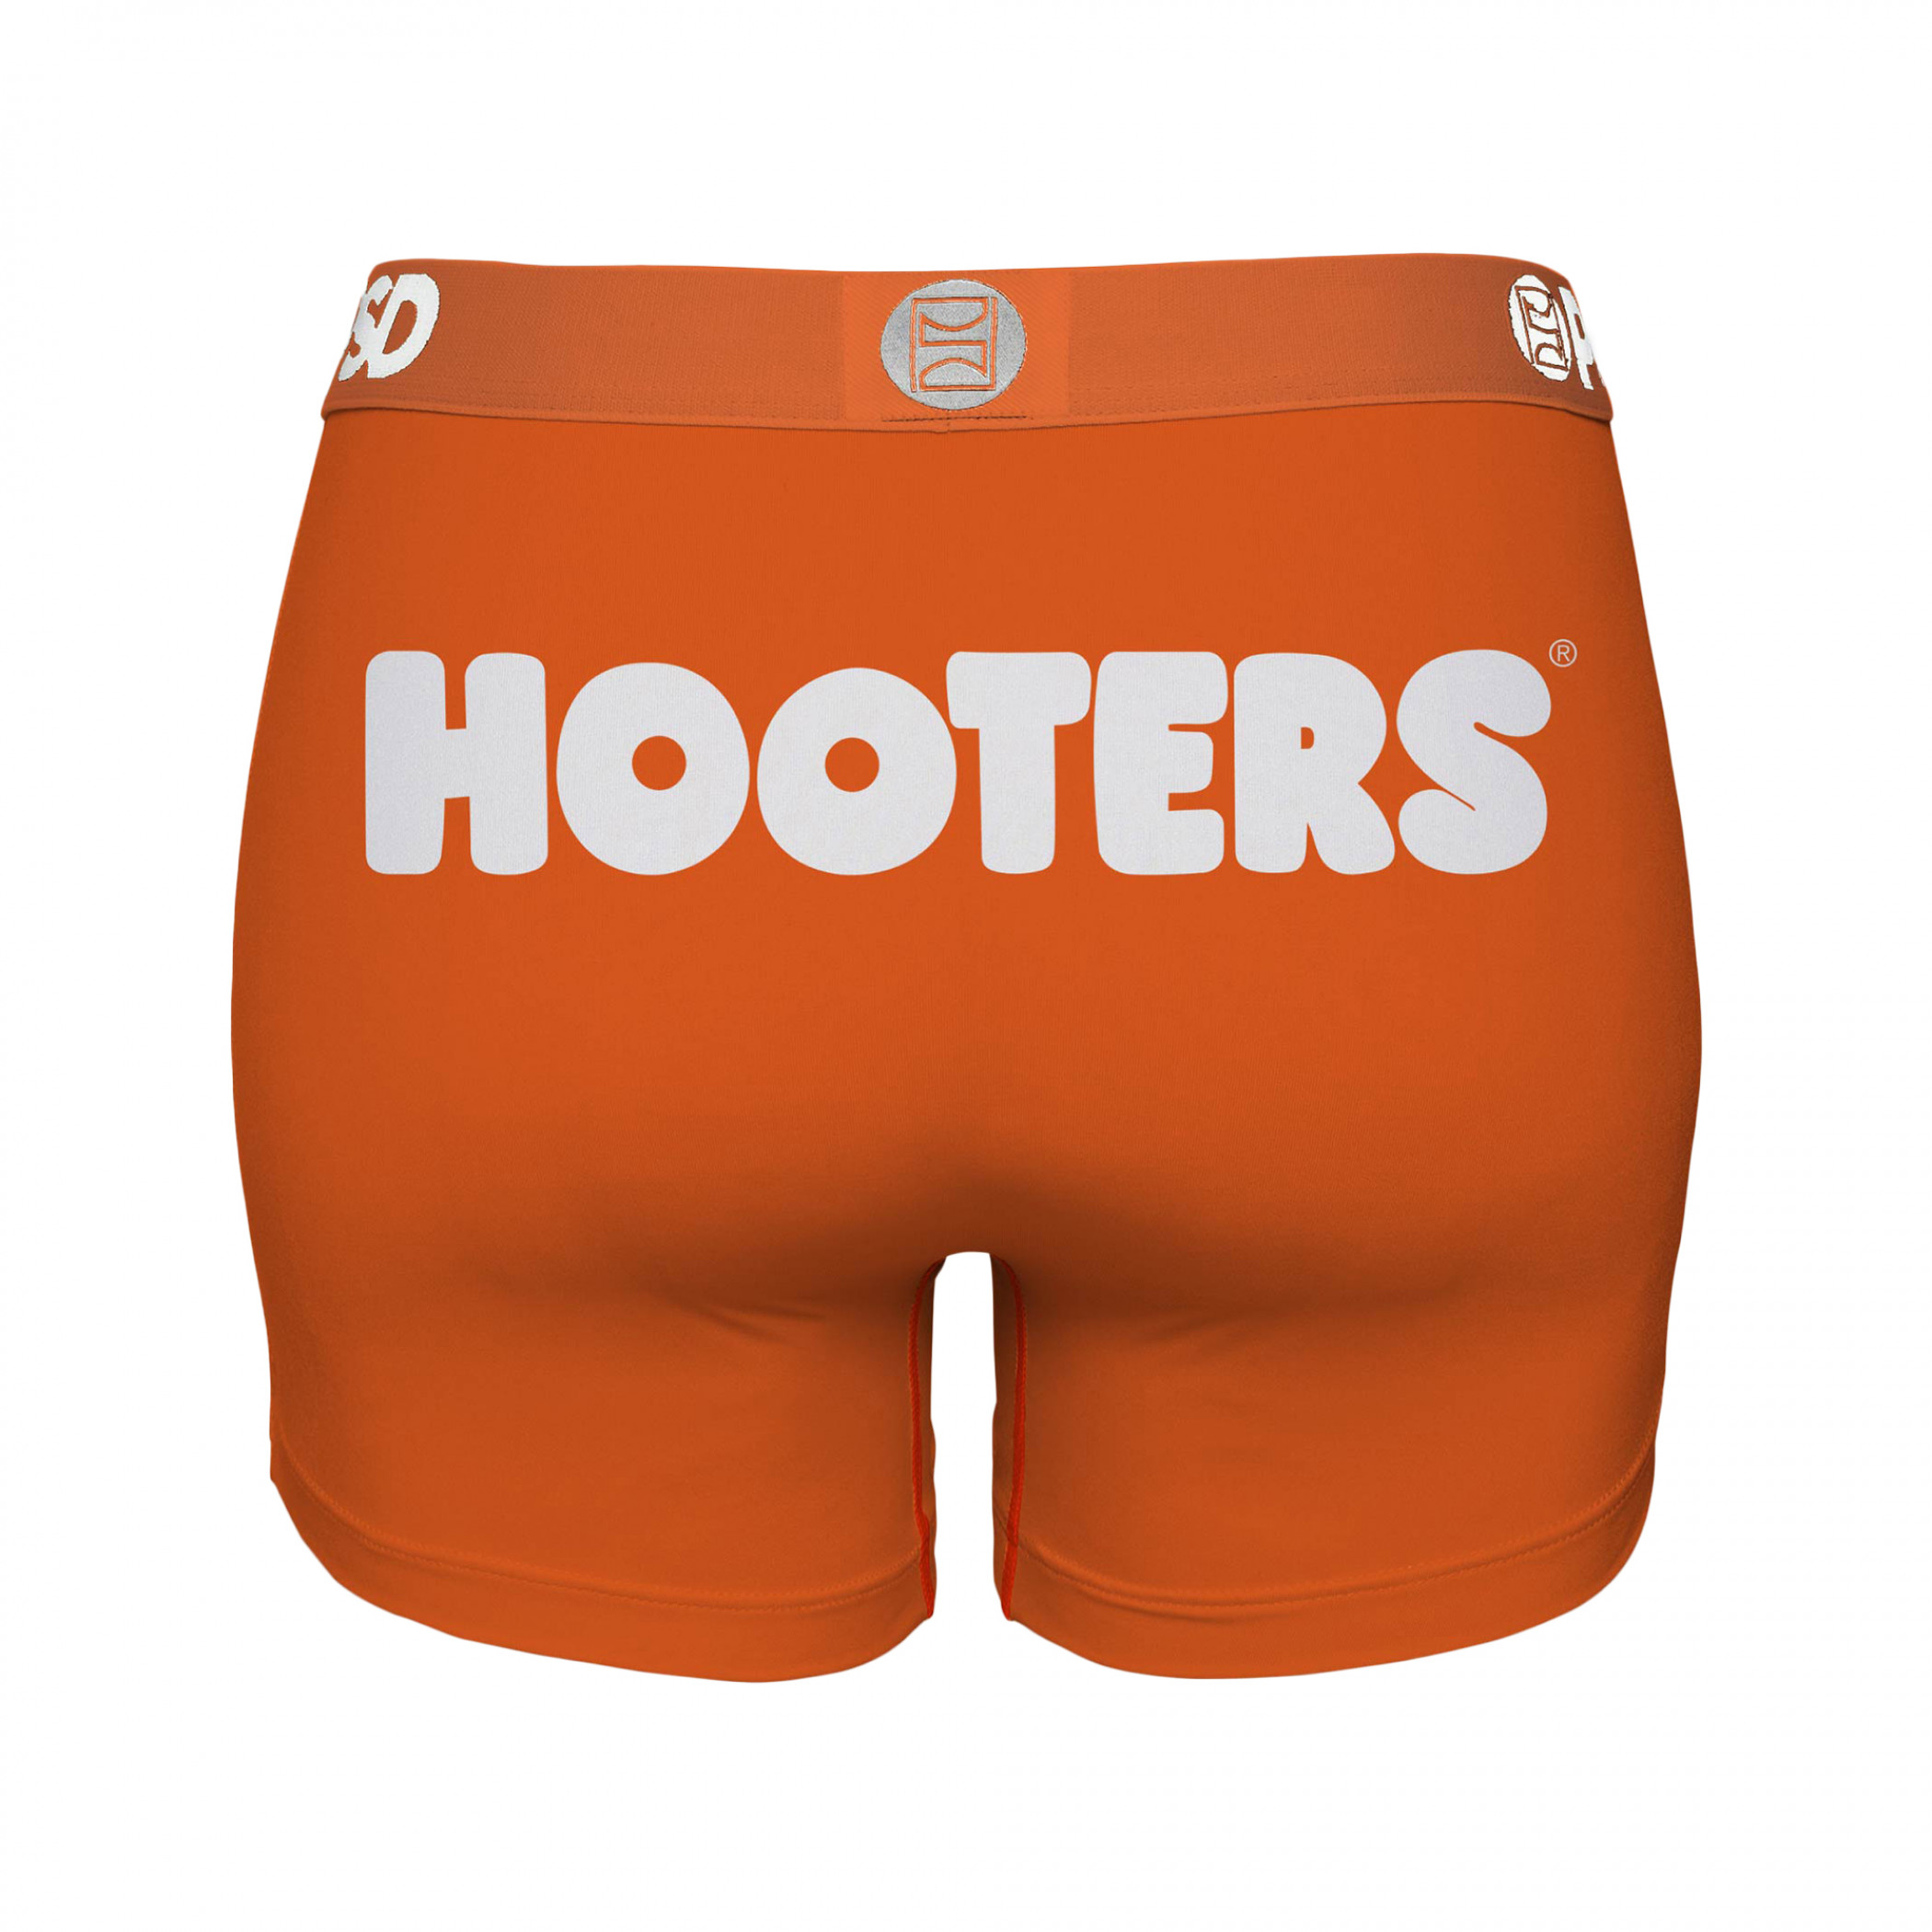 Hooters Retro Uniform PSD Long Boy Shorts Underwear